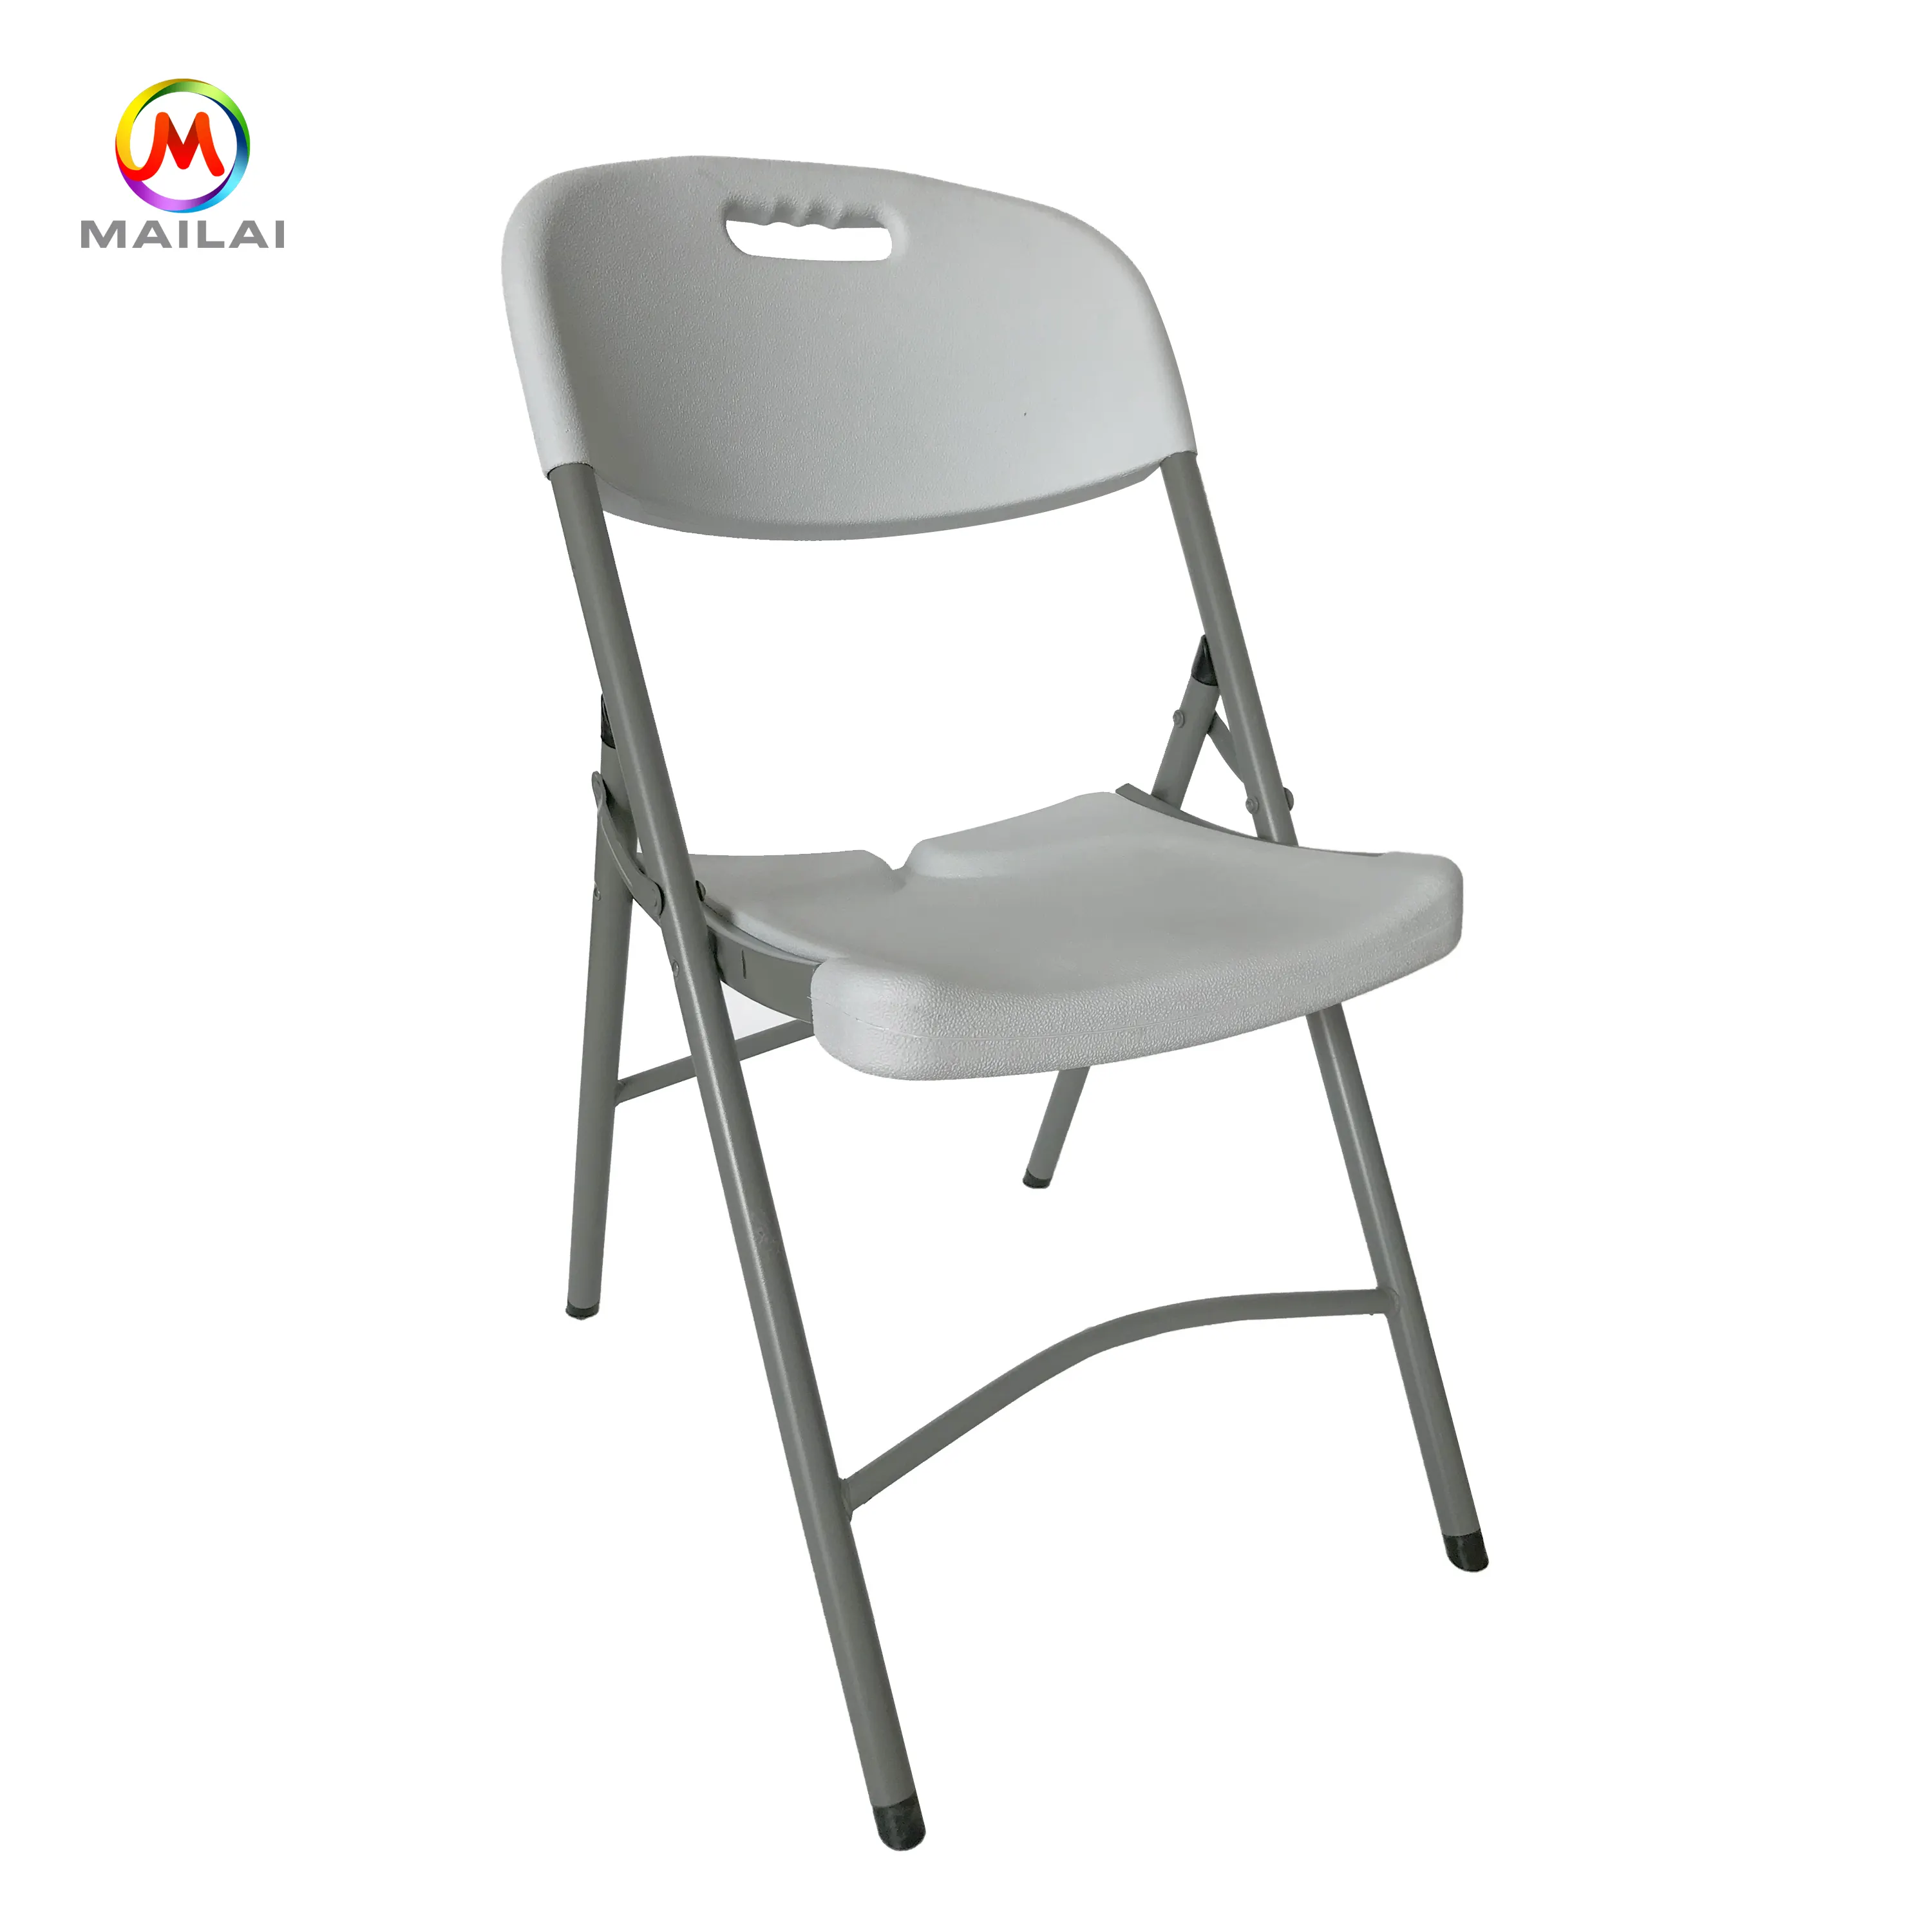 Foshan Manufacture Plastic Folding Chair Cheap metal Plastic Folding Chair For Banquet event